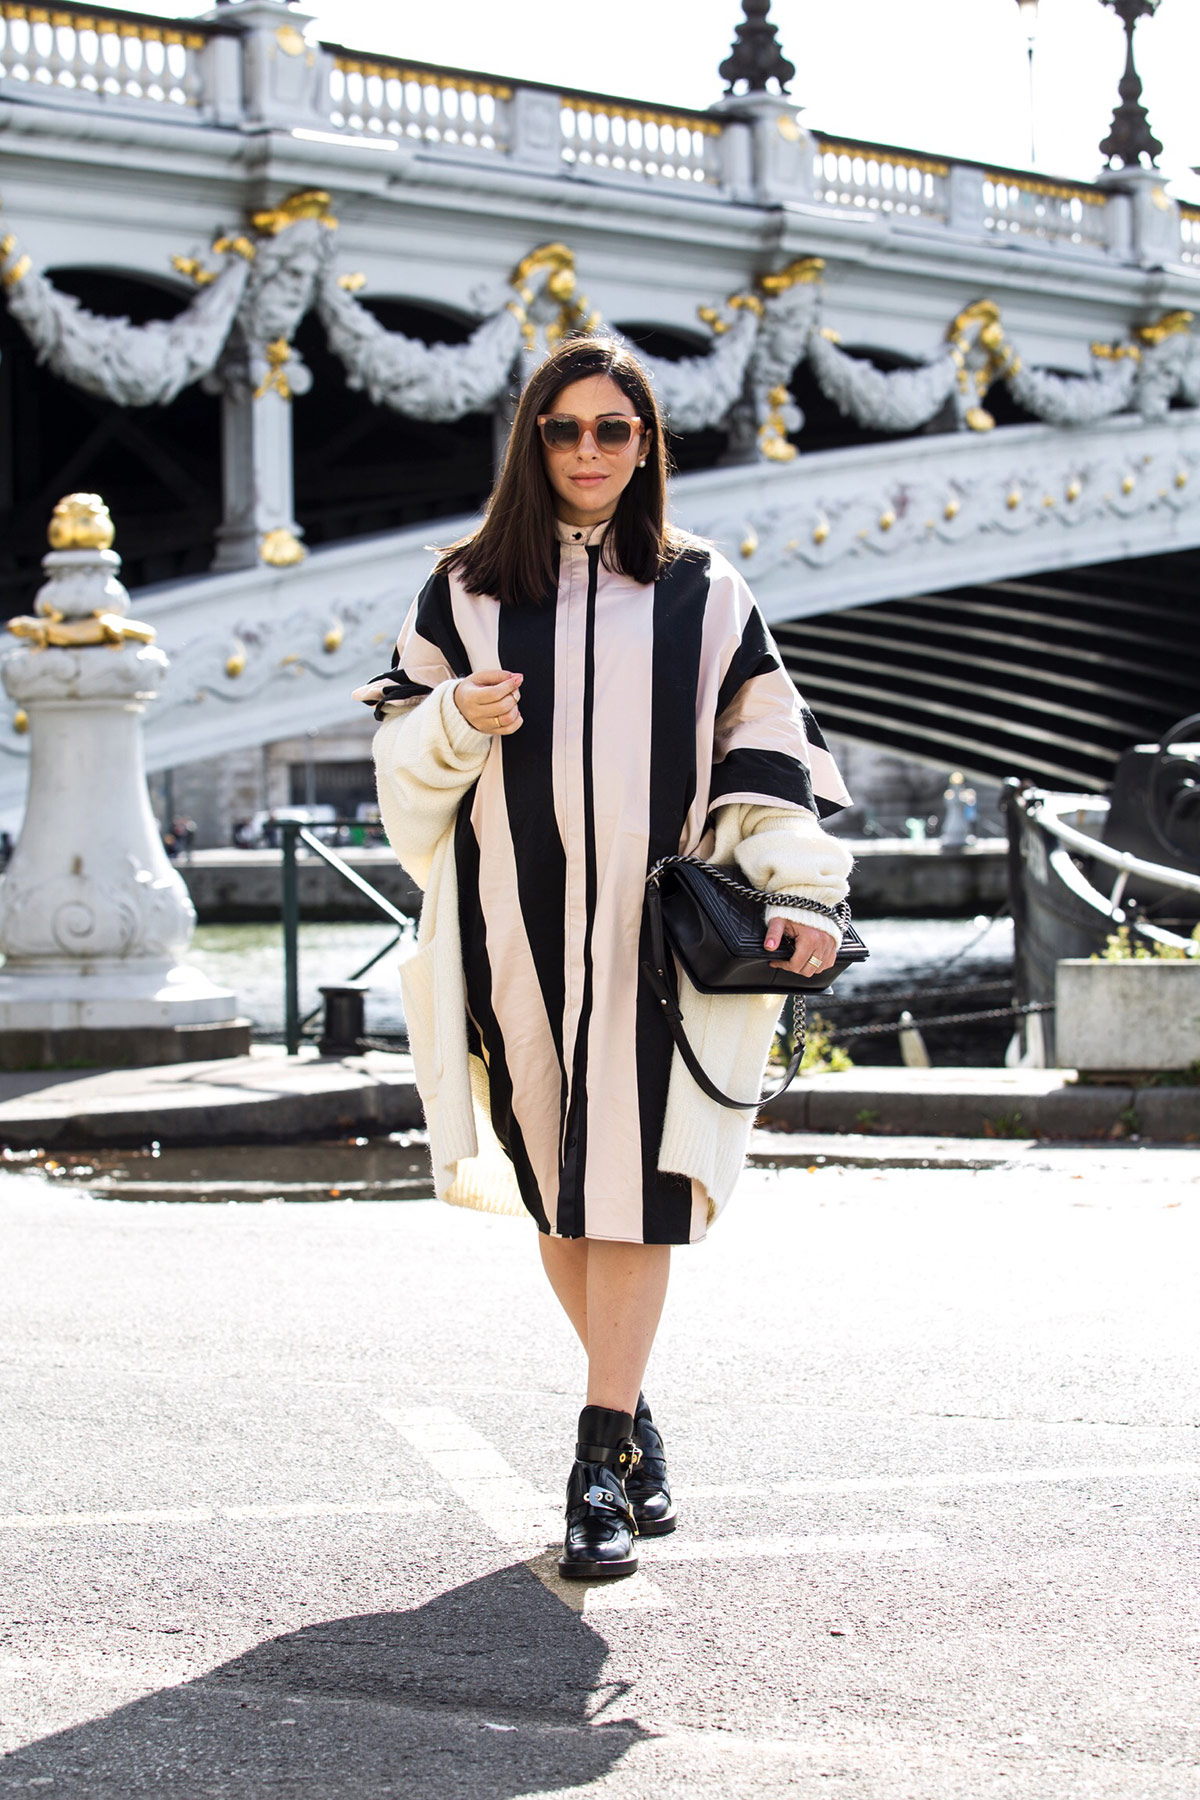 stripes and ruffles dress for Paris Fashion Week by Stella Asteria - Fashion & Lifestyle Blogger